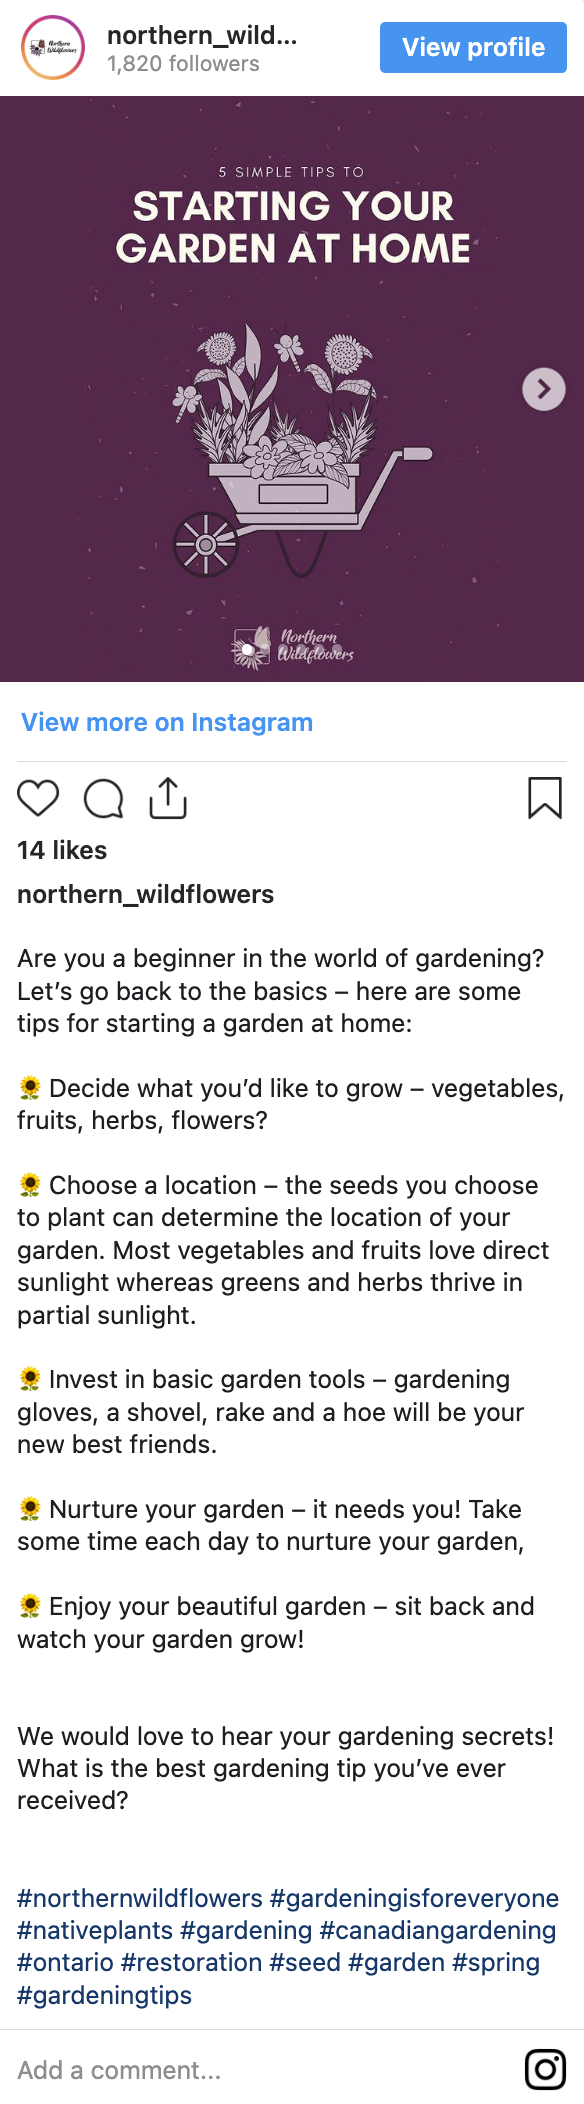 Starting a Garden at Home